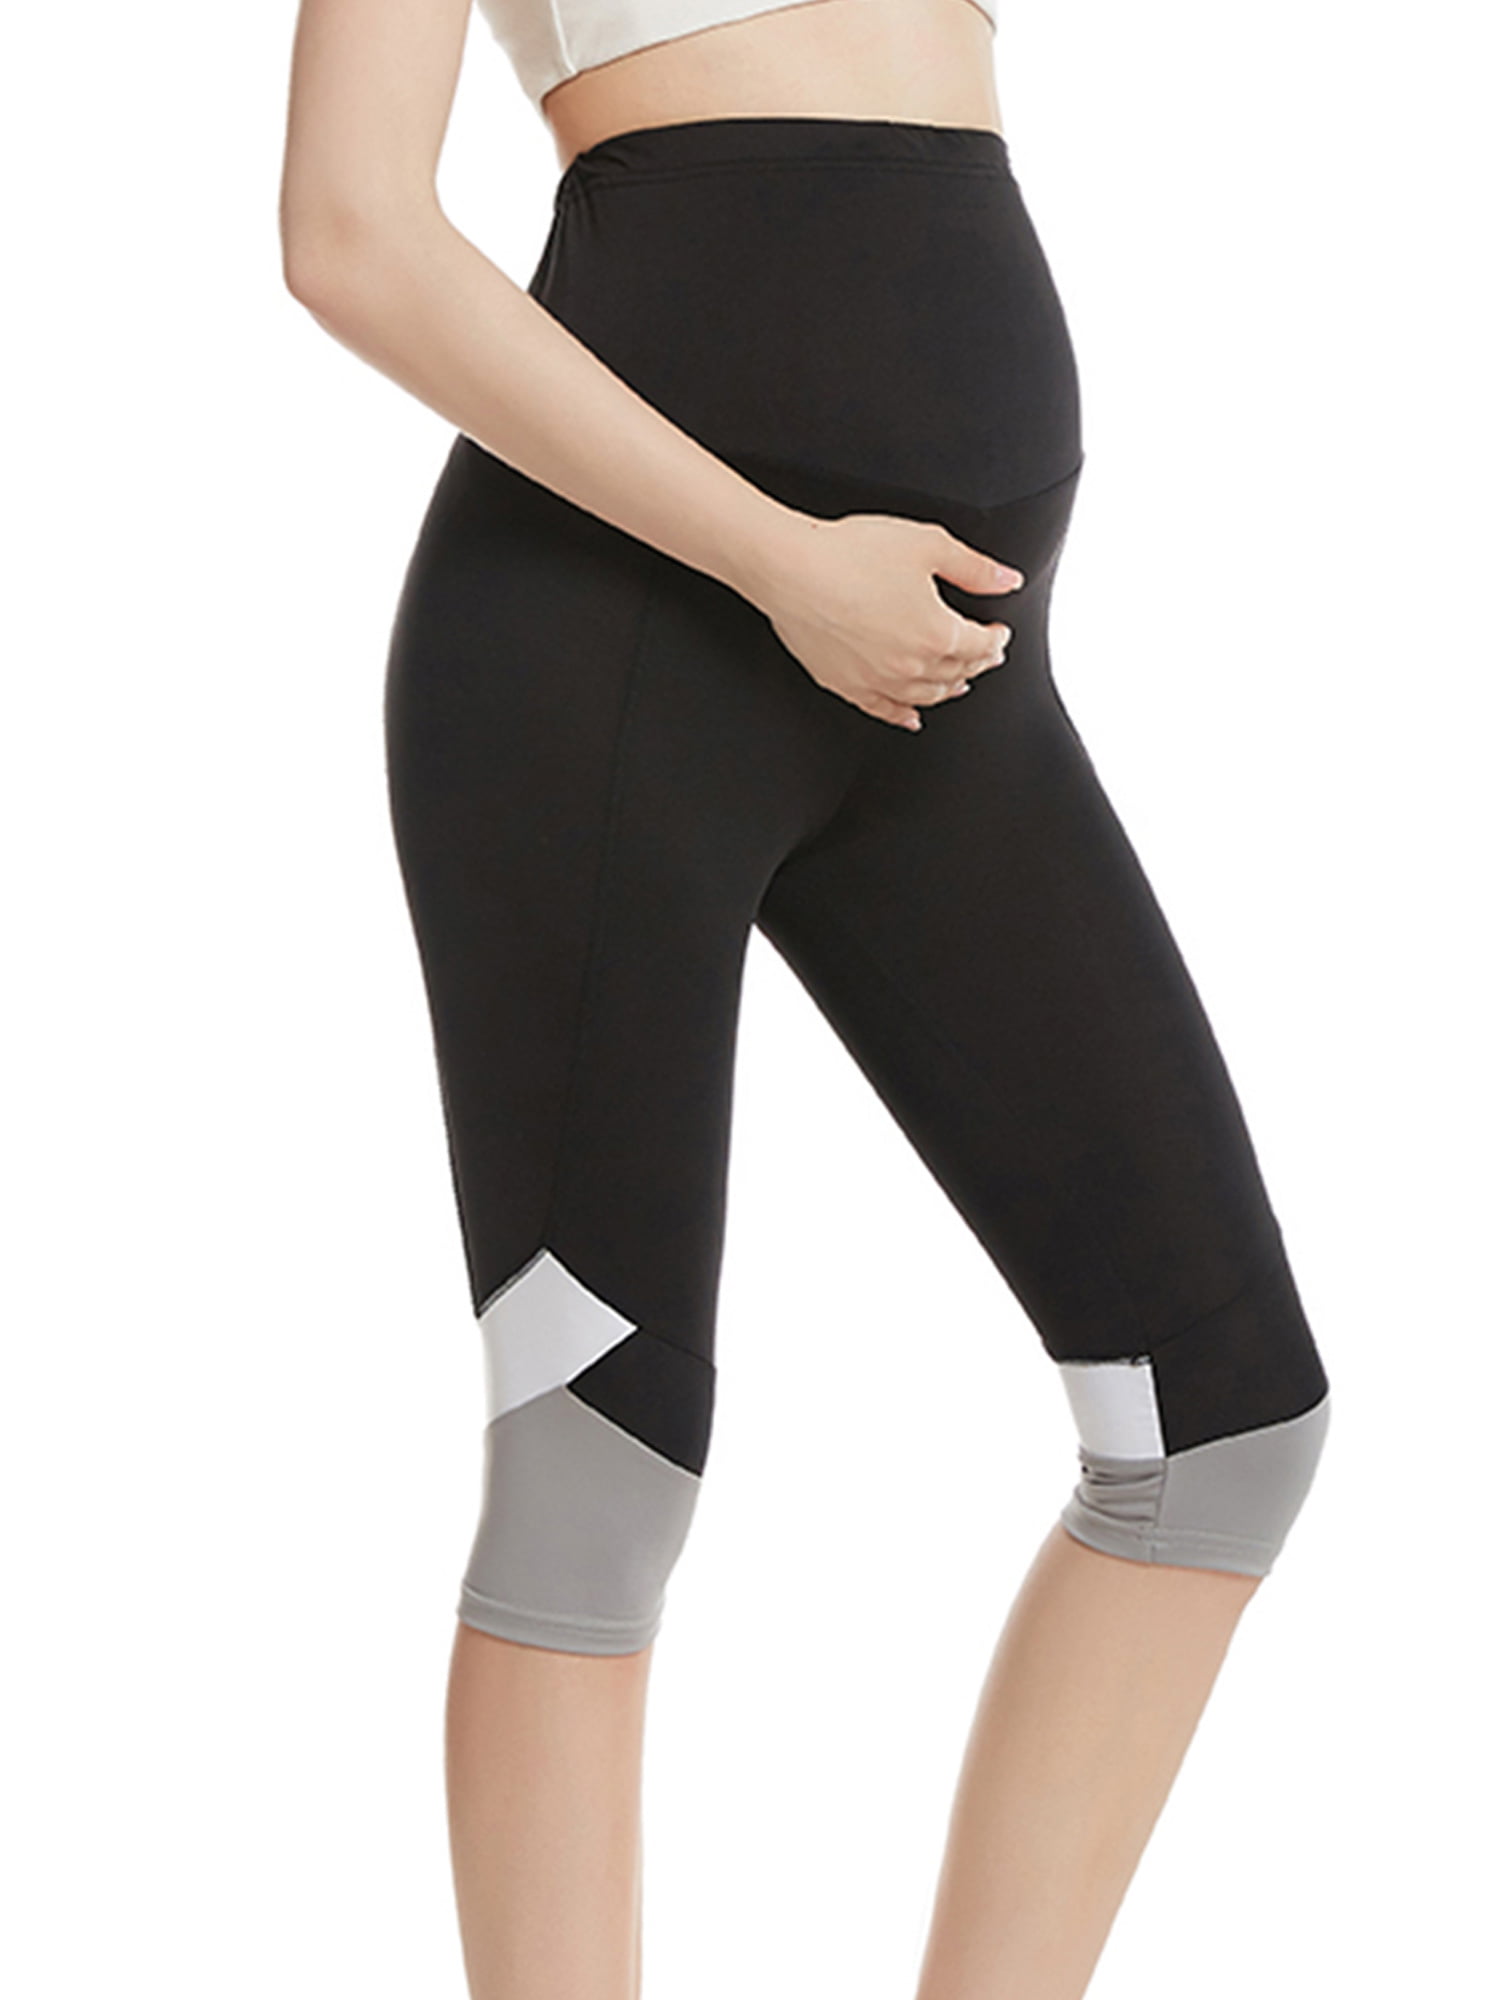 Maacie Women's Maternity Yoga Pants Leggings Comfortable Pregnancy Capri Pants 